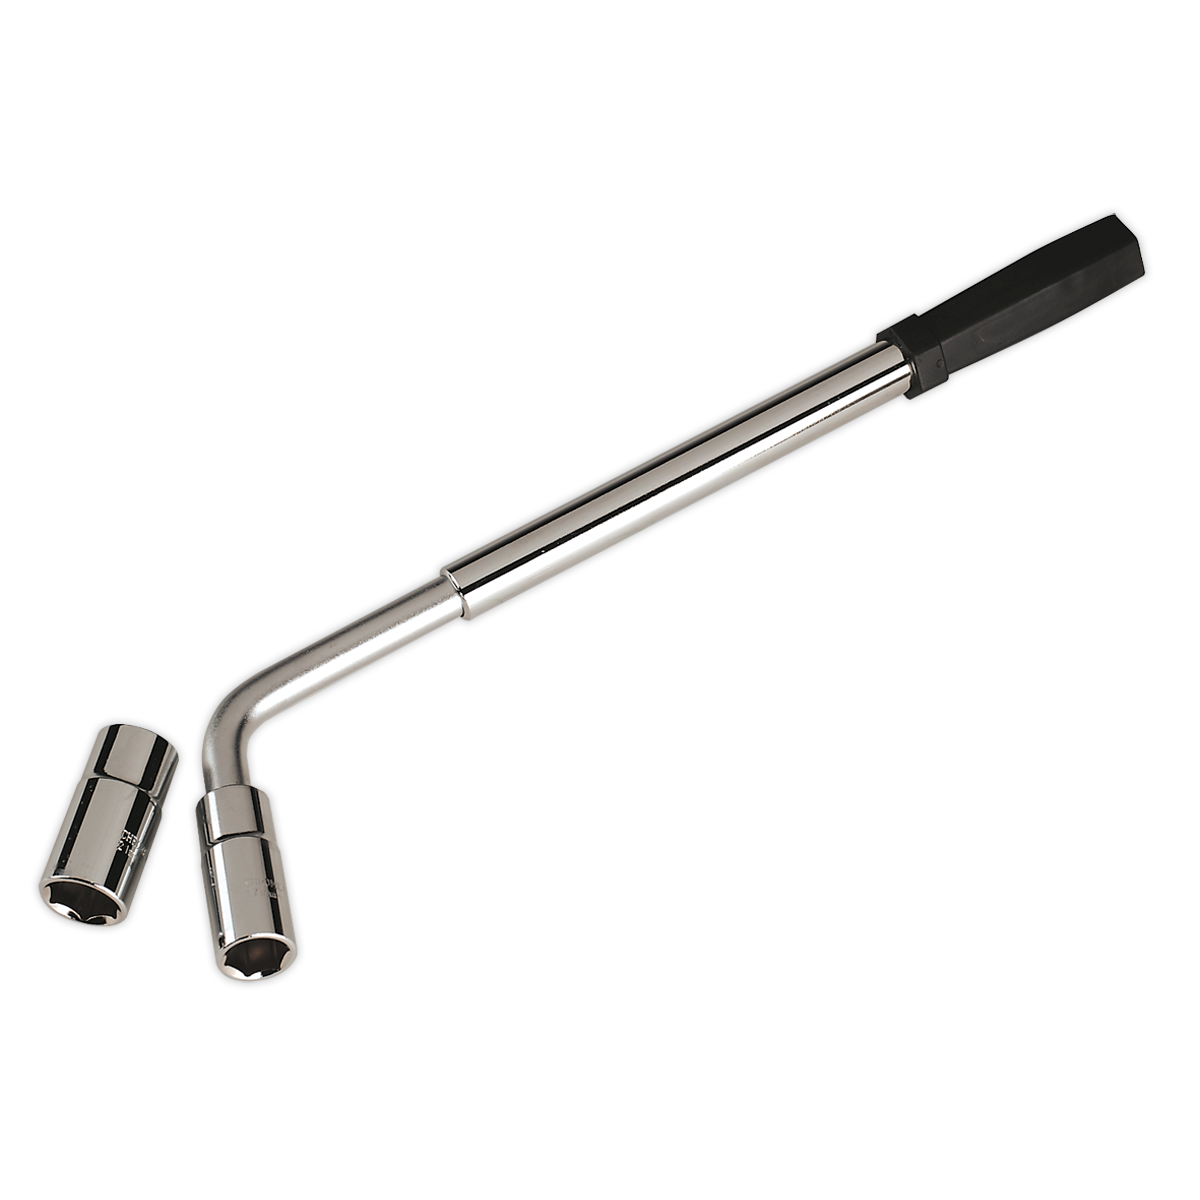 Extendable L-Bar Wrench Set 3pc 1/2"Sq Drive - S0472 - Farming Parts